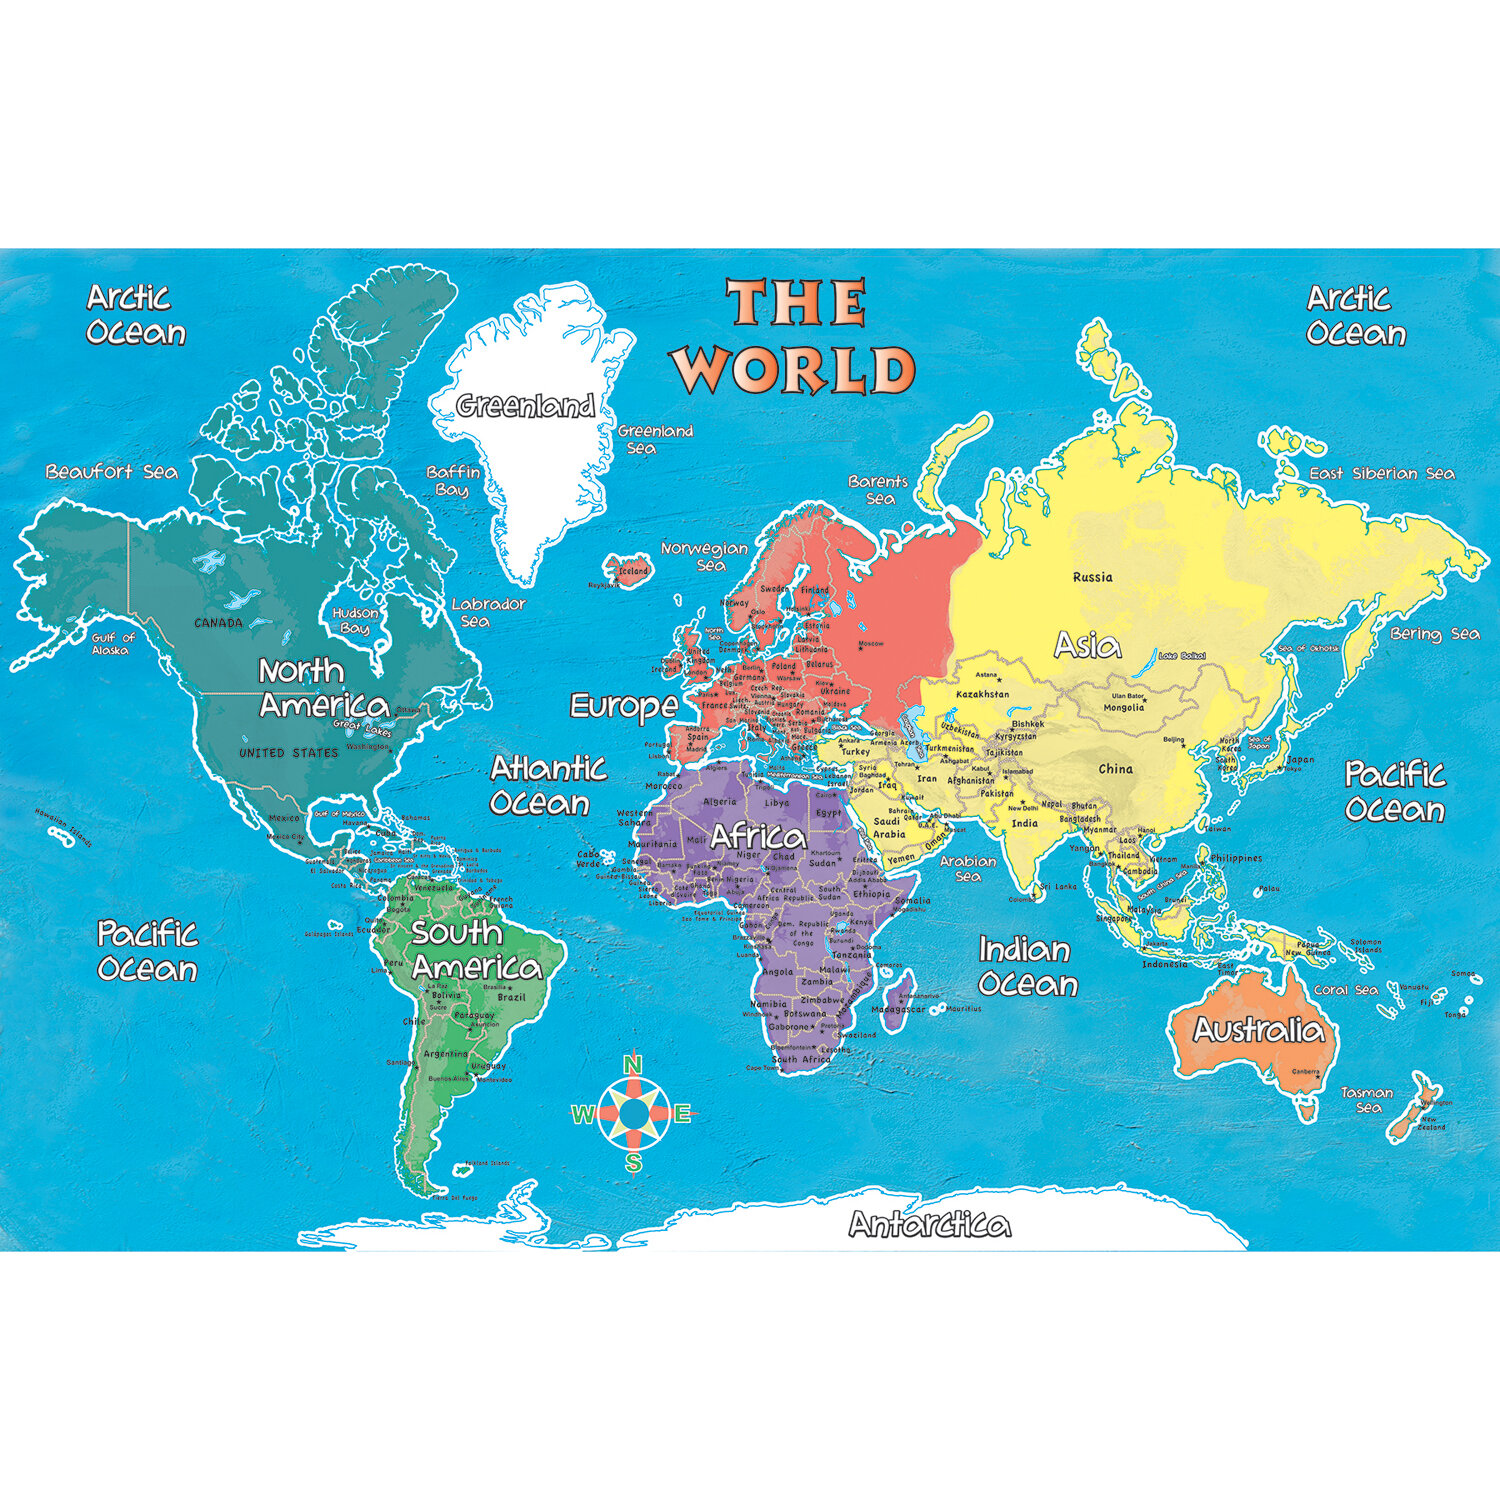 4 Ft. World Map - Laminated - Replogle Globes